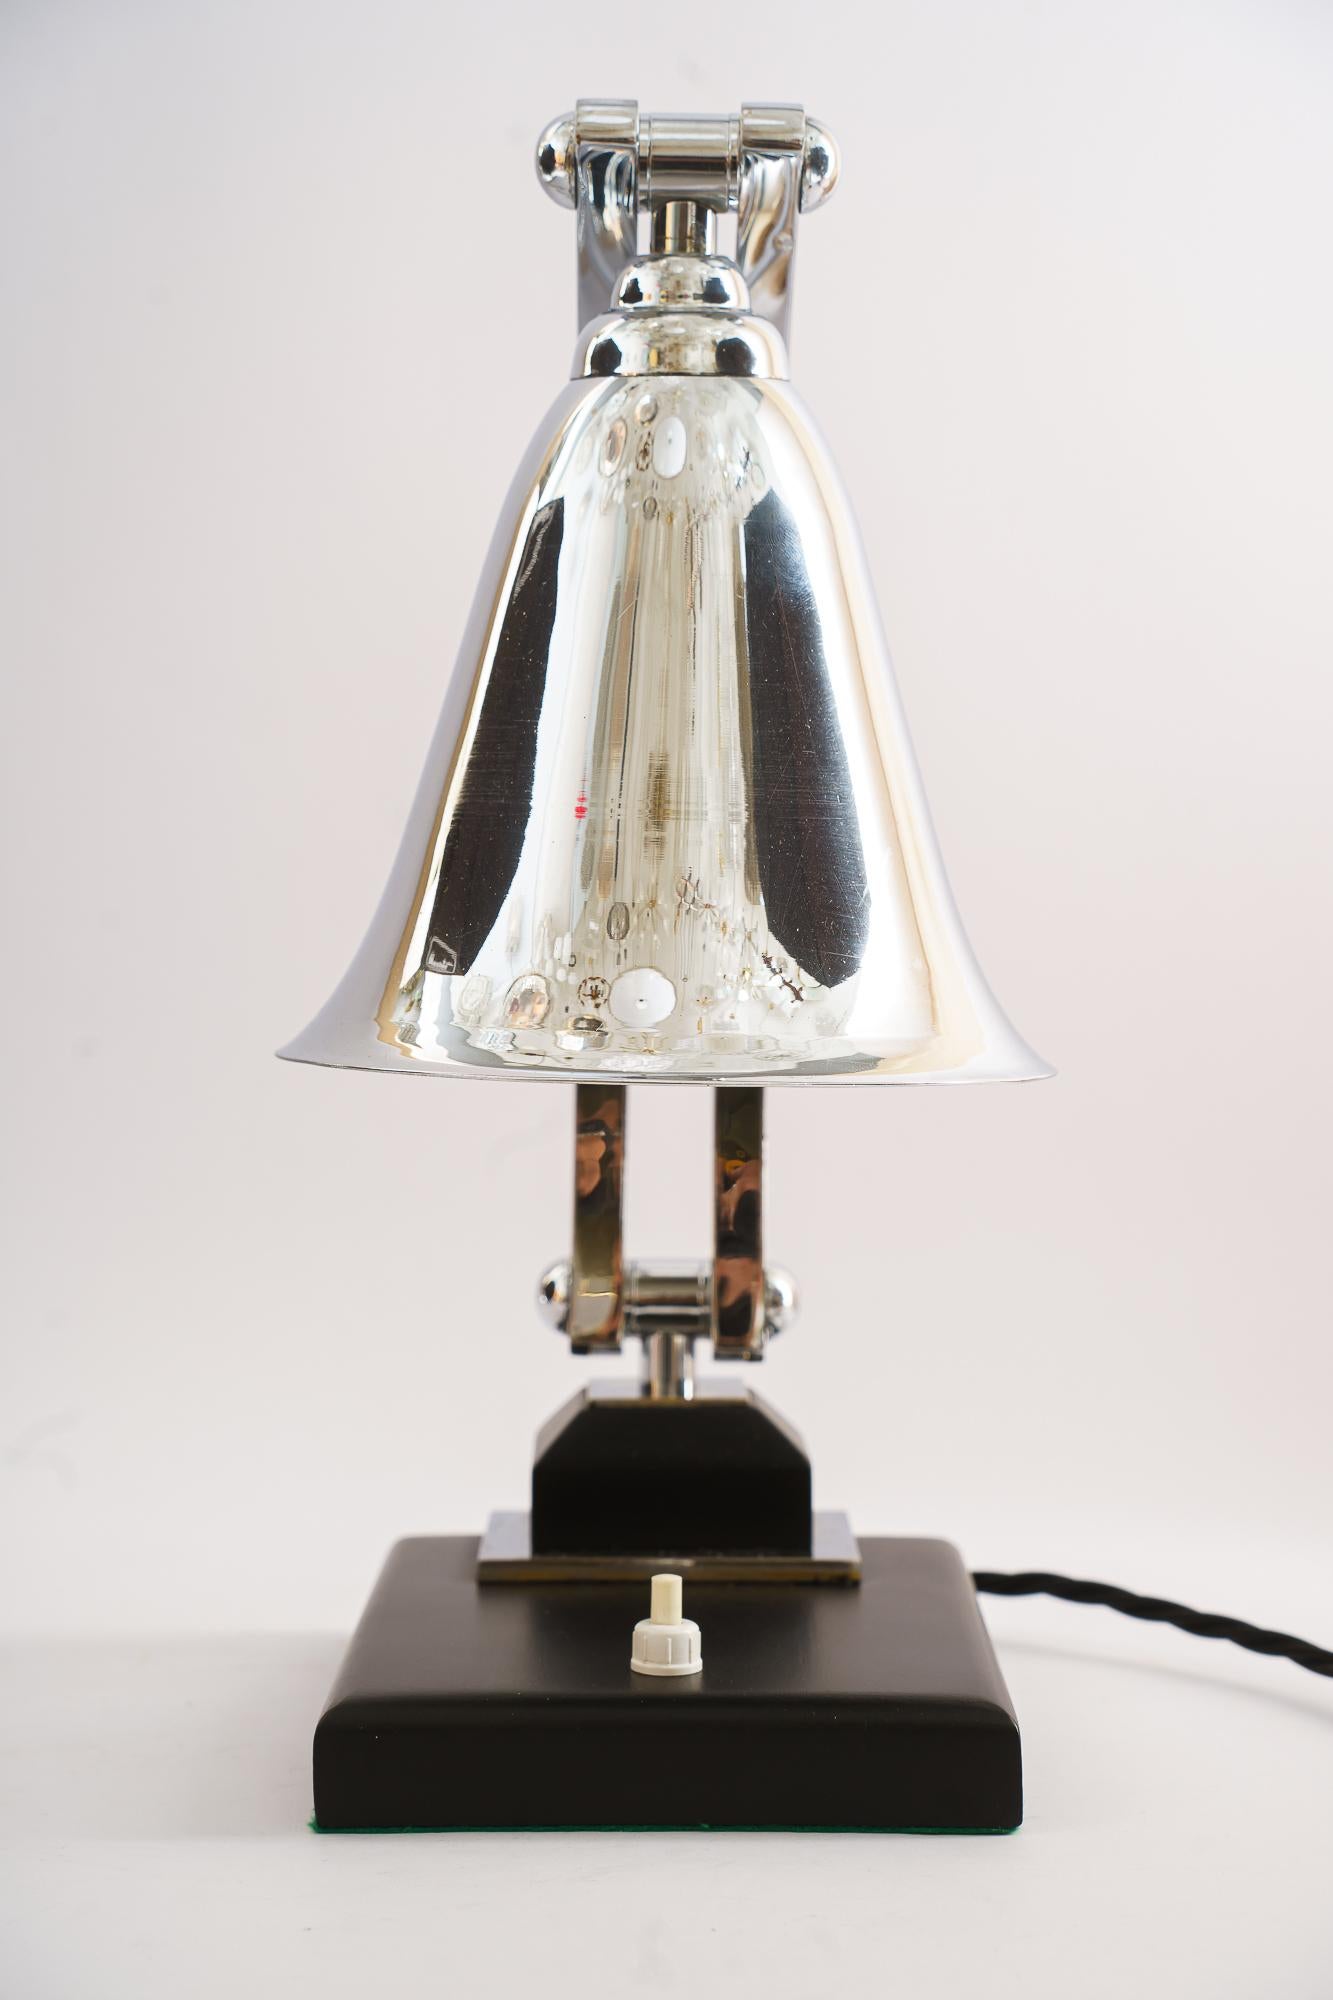 Art Deco swiveling chrome table lamp vienna around 1930s
Brass (Chromed) polished. 

